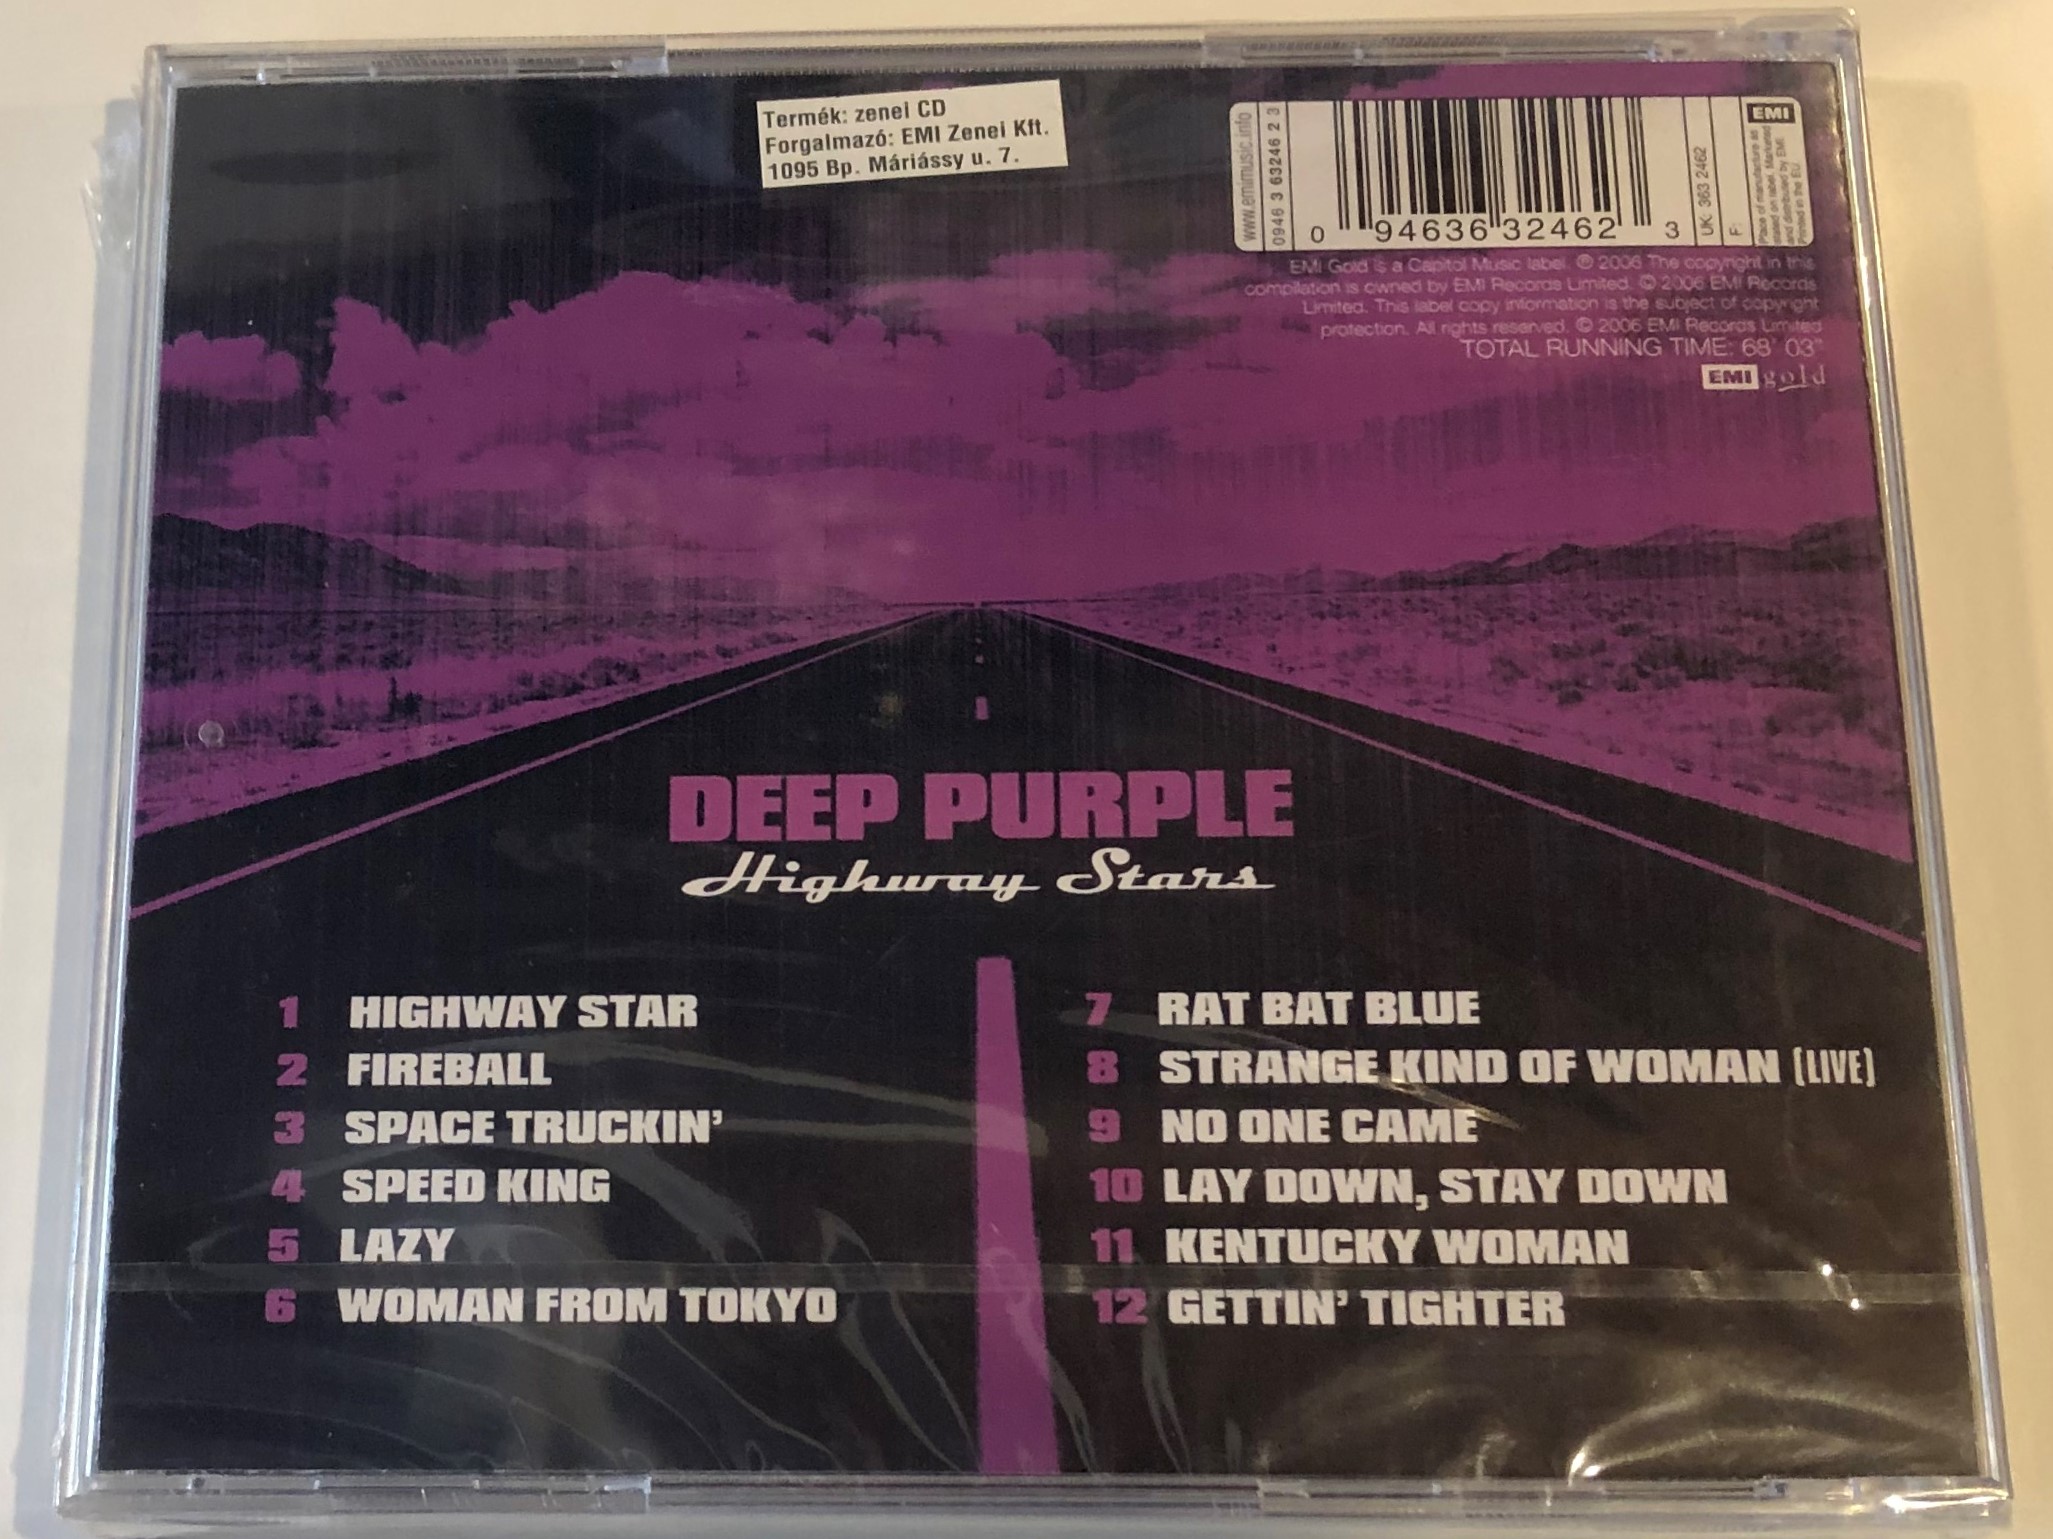 deep-purple-highway-stars-emi-gold-audio-cd-2006-094636324623-2-.jpg